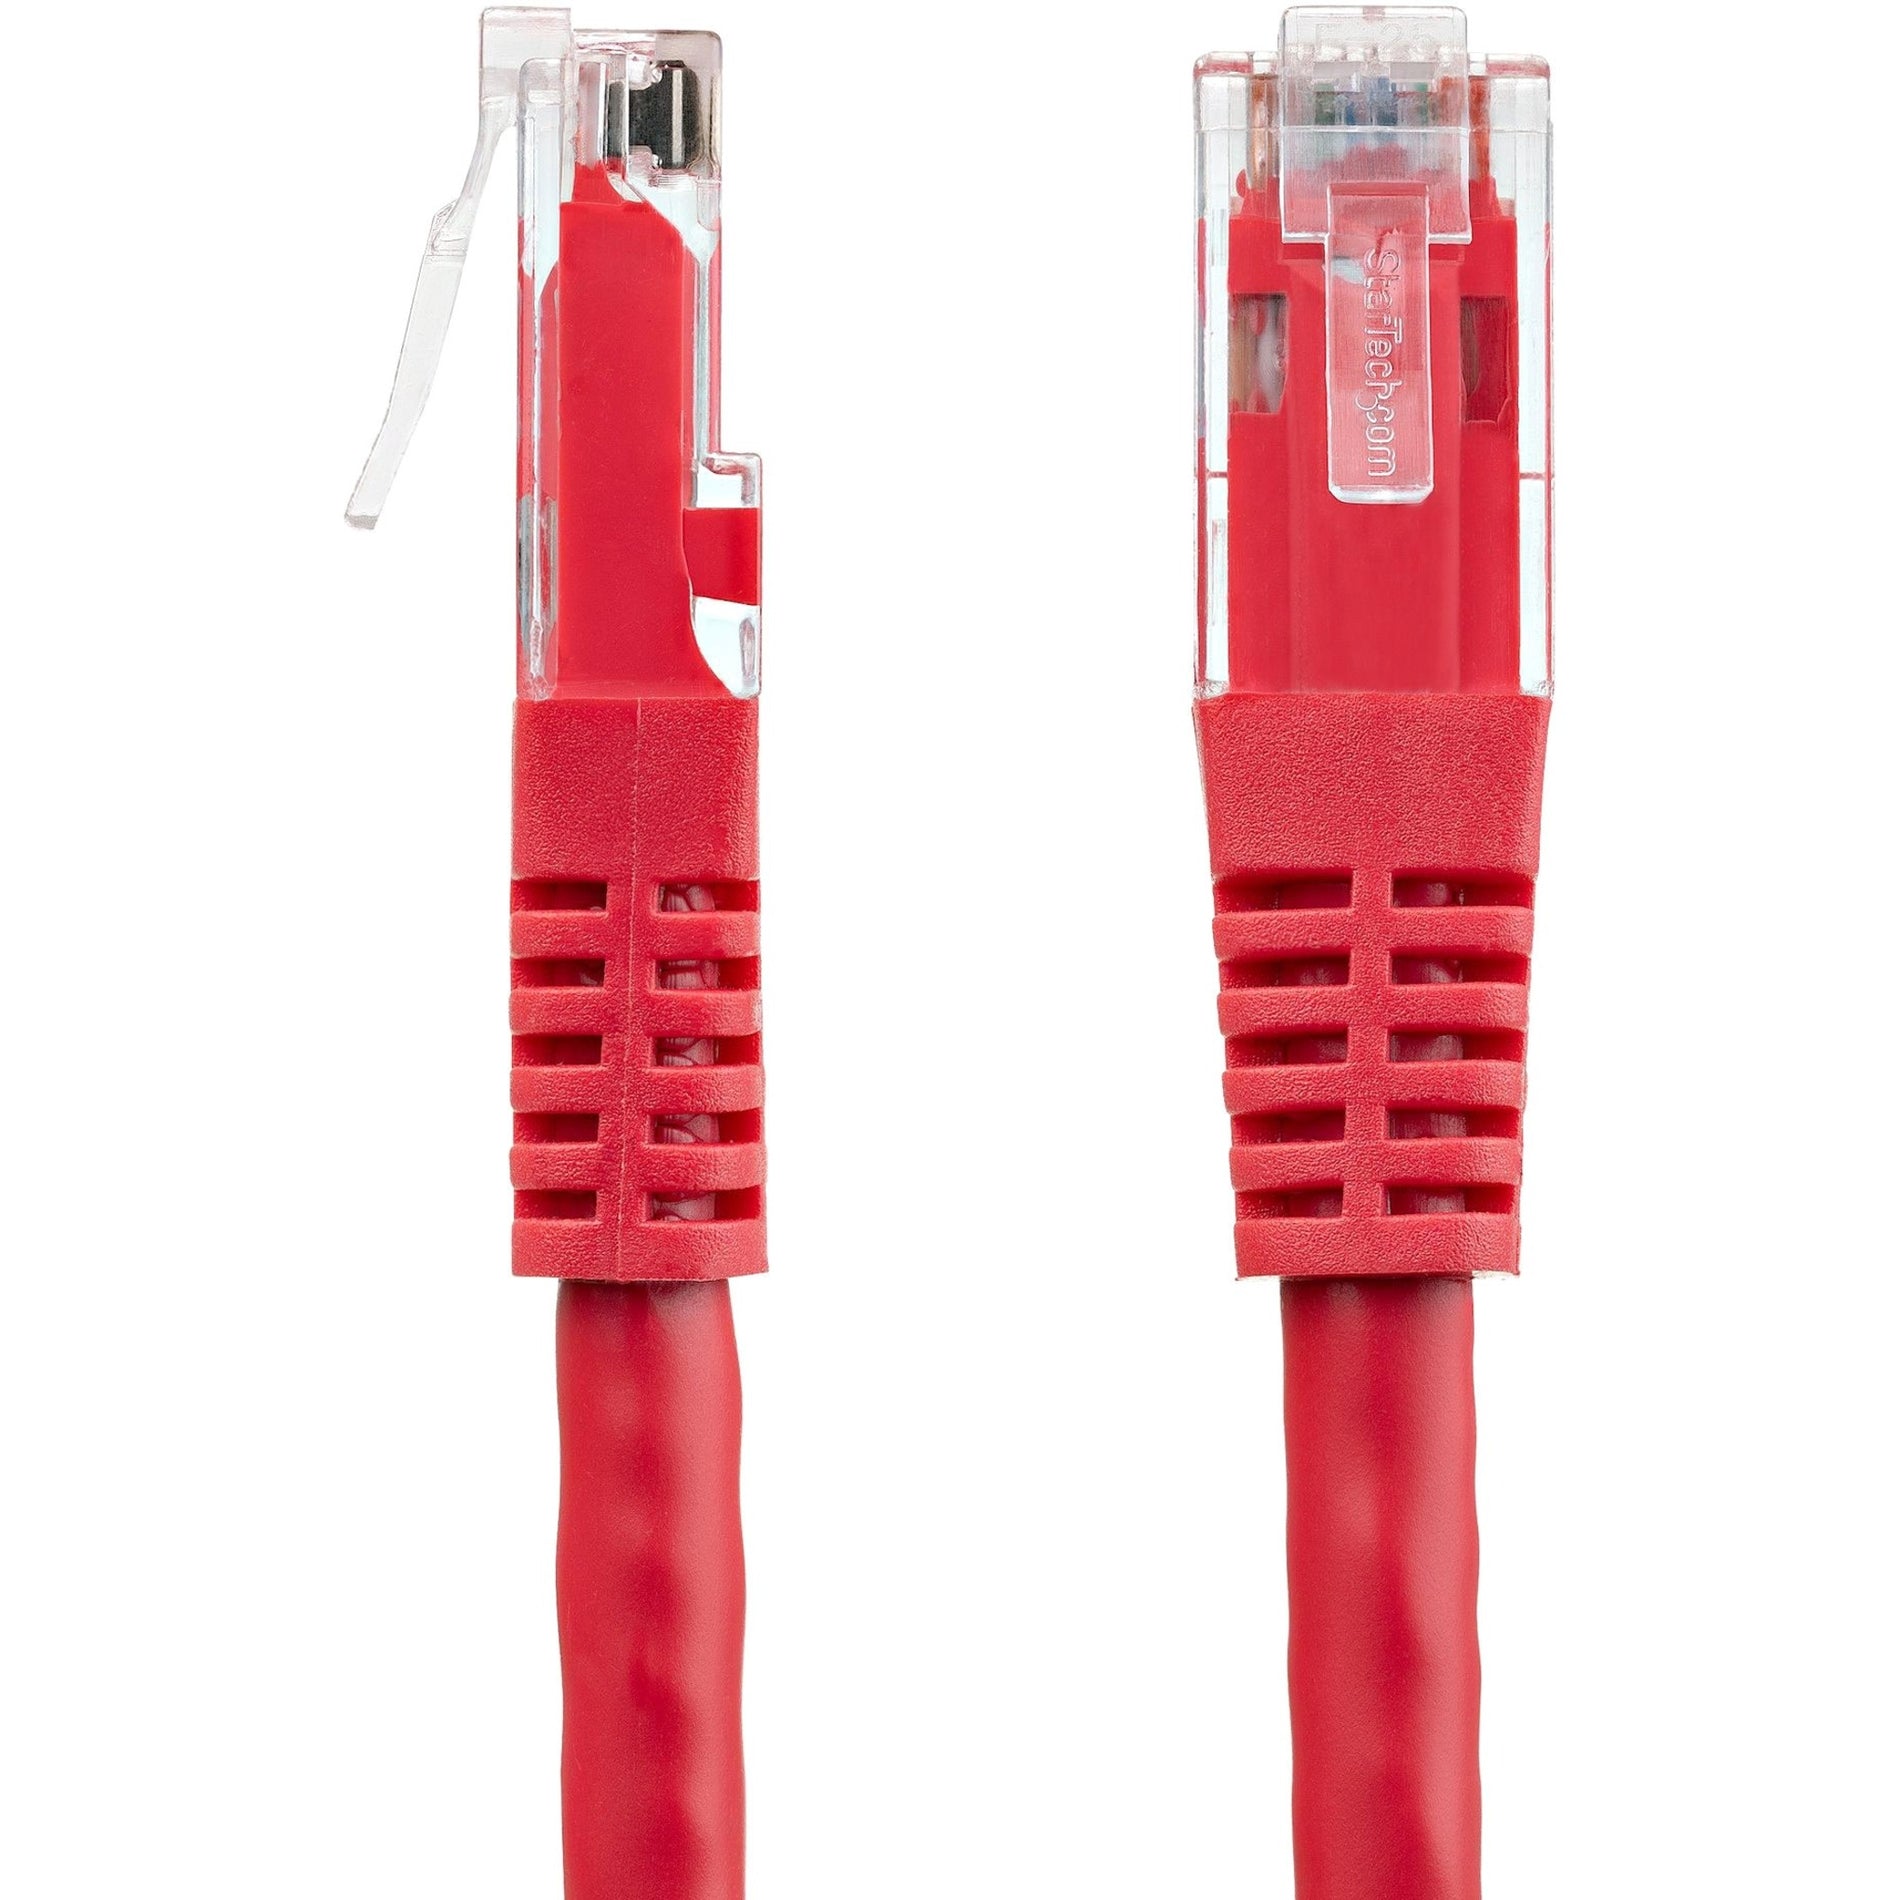 StarTech.com C6PATCH50RD 50ft Red Cat6 UTP Patch Cable ETL Verified, Gigabit Ethernet Network Cord